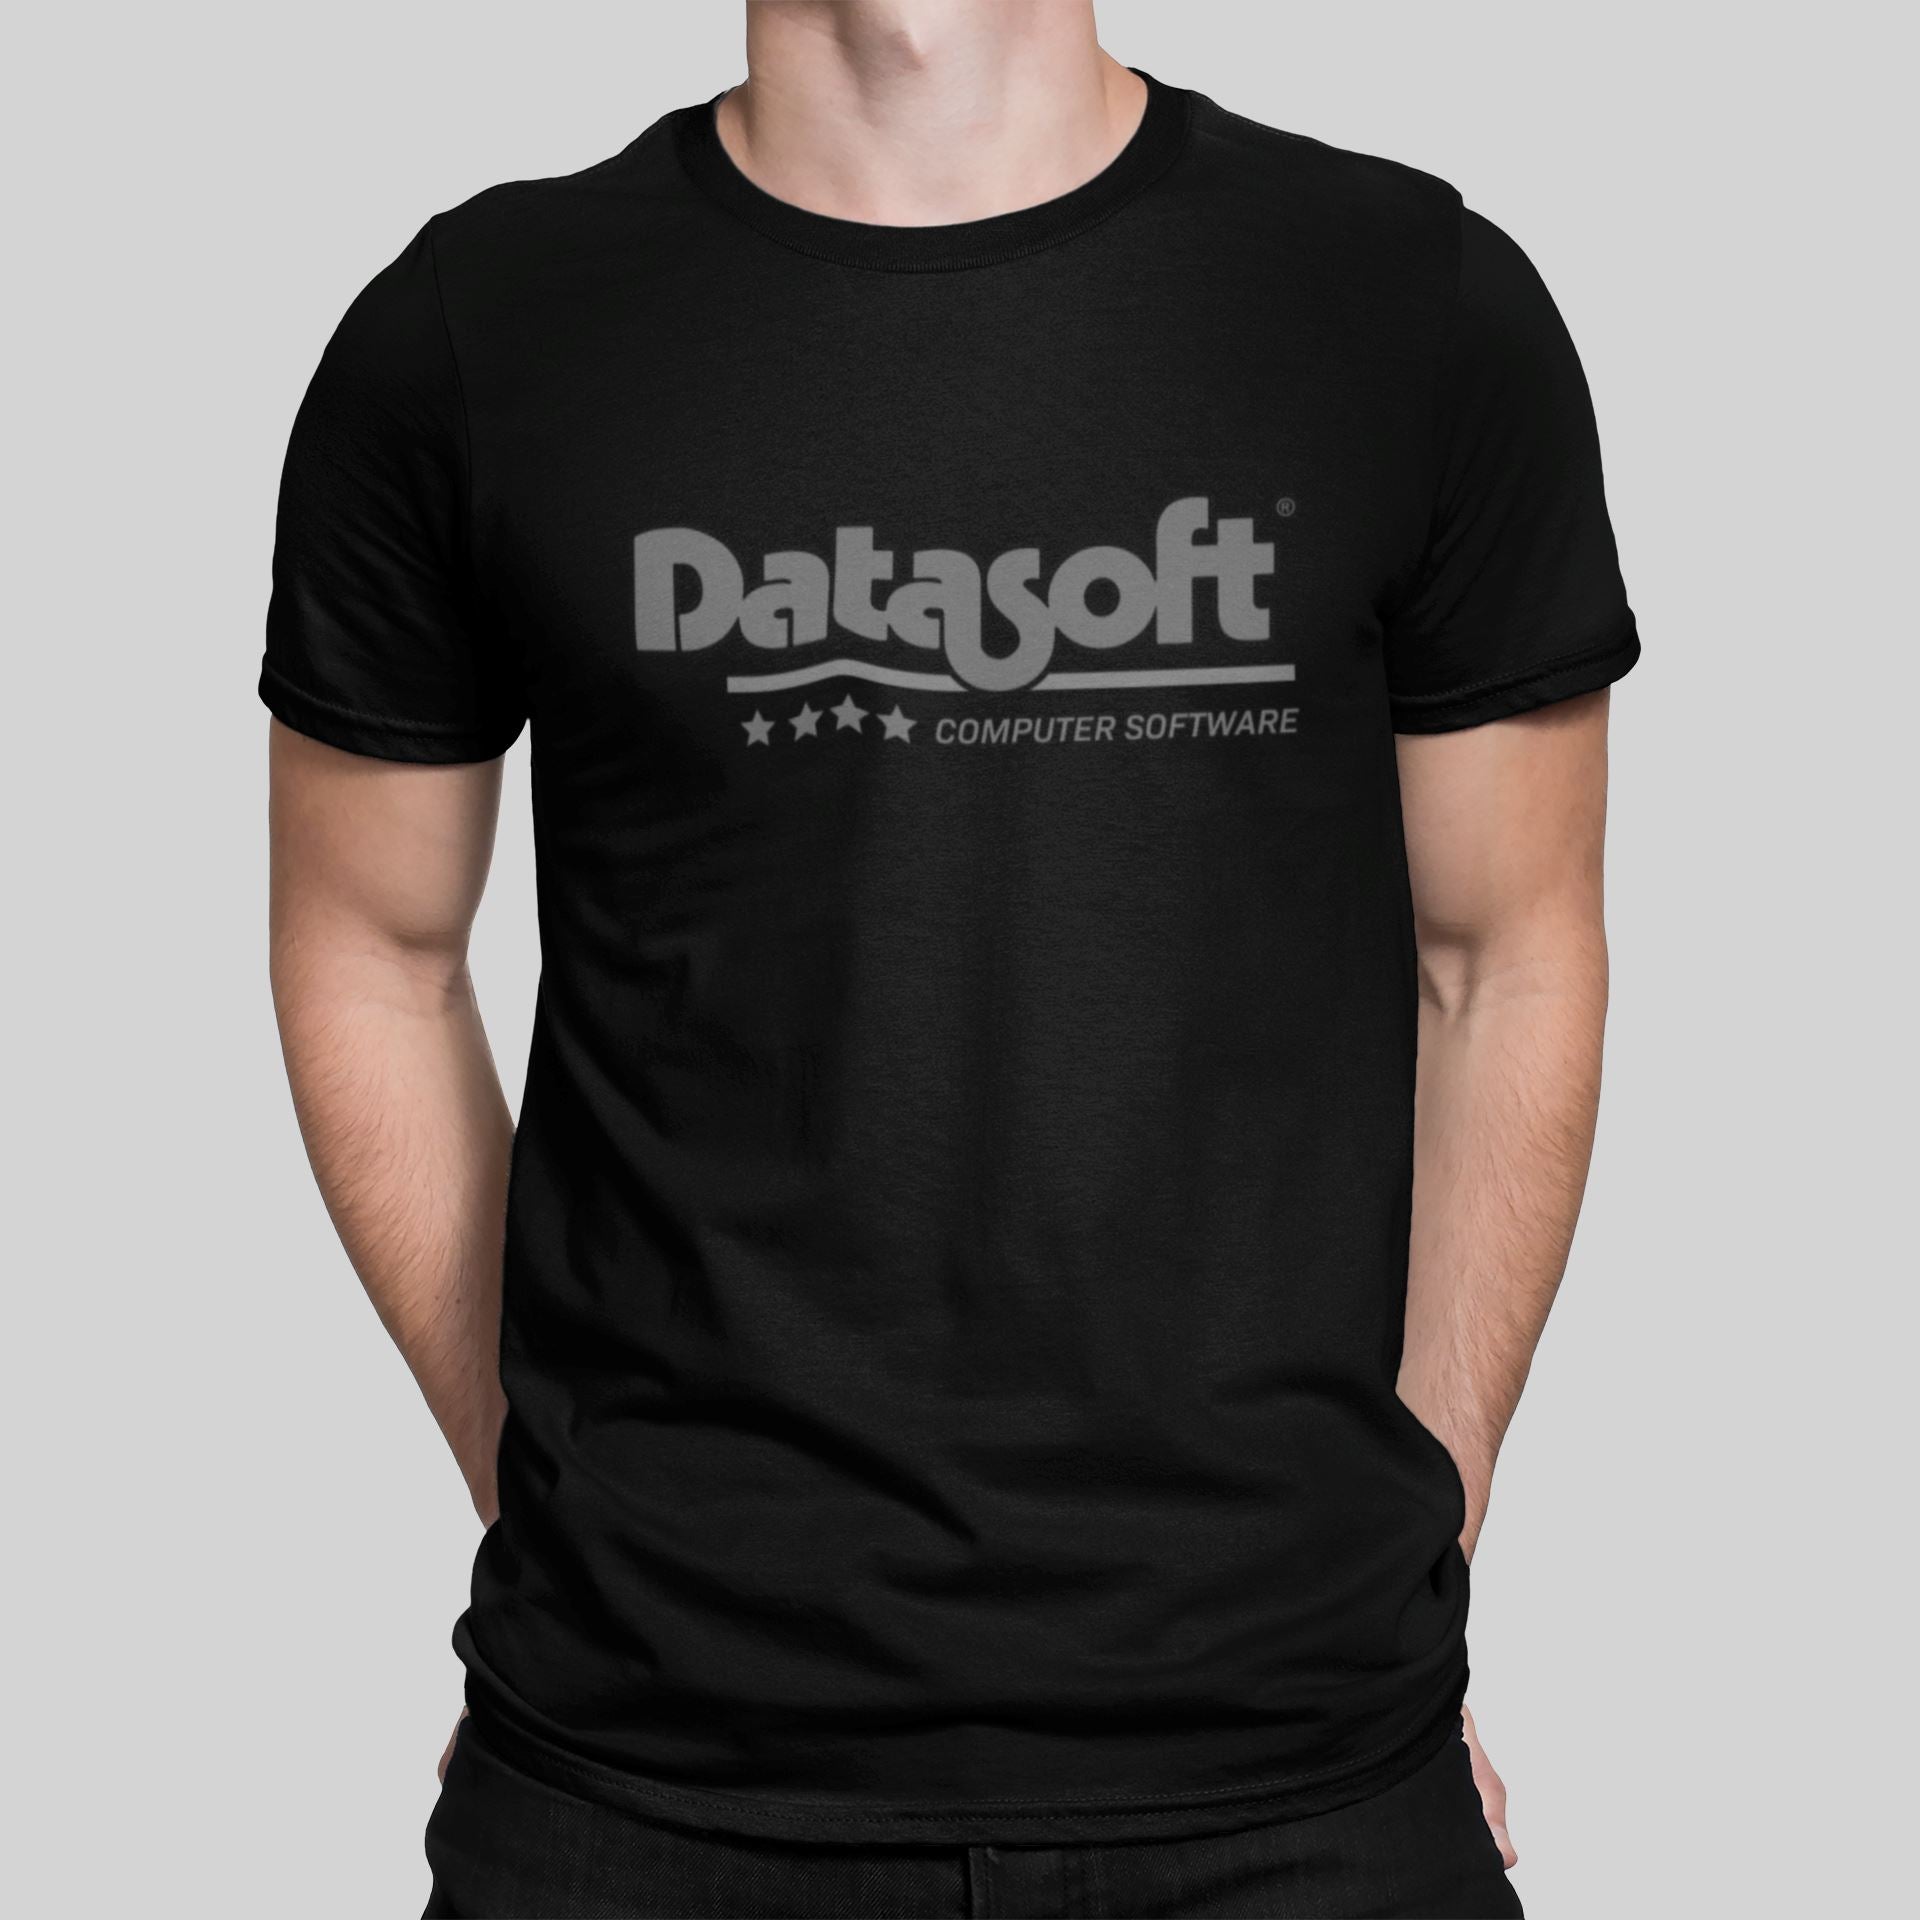 Datasoft Logo Retro Gaming T-Shirt T-Shirt Seven Squared Small 34-36" Black Silver Logo 